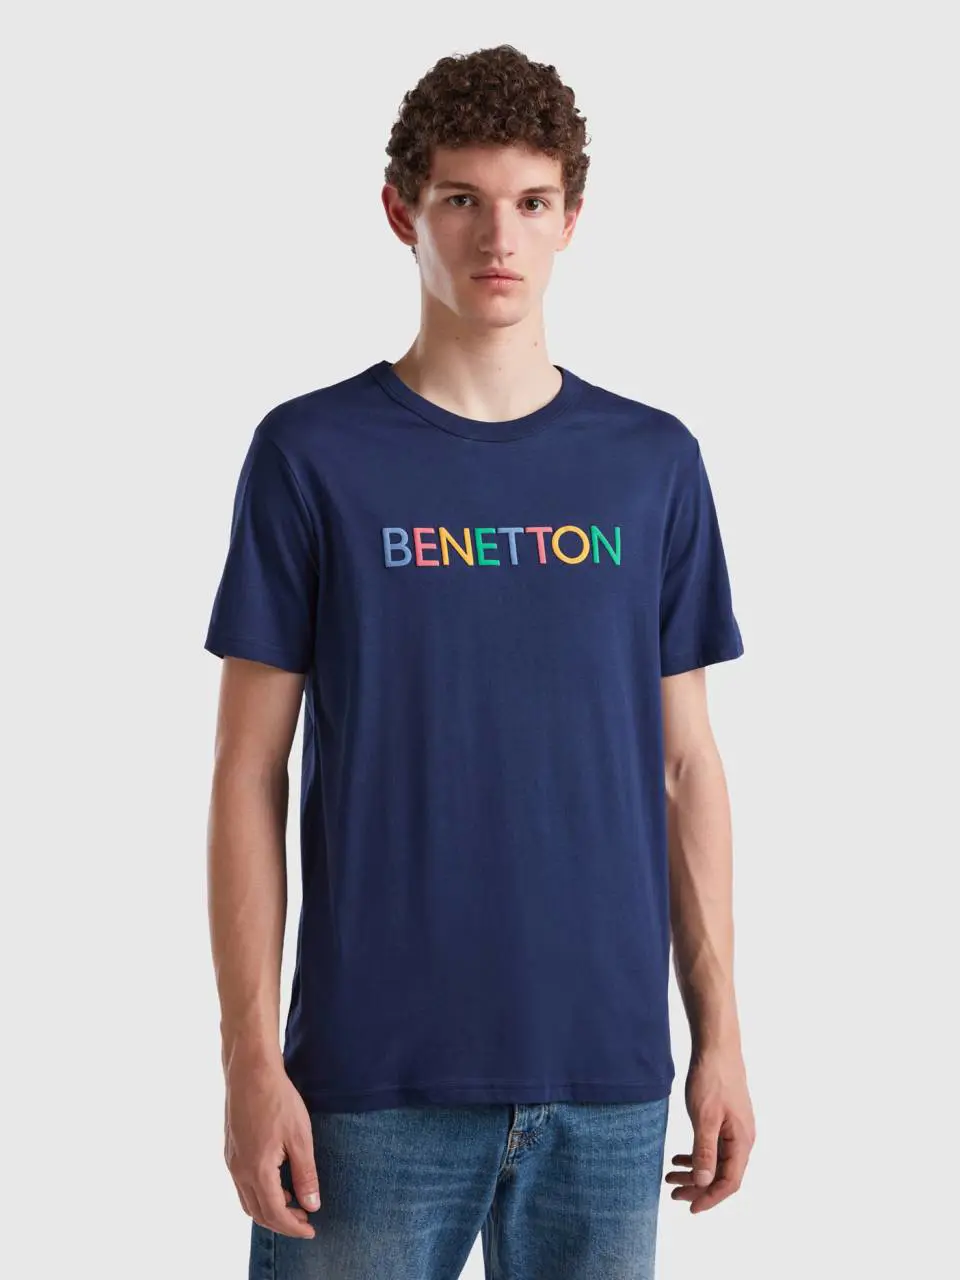 Benetton dark blue t-shirt in organic cotton with multicolored logo. 1